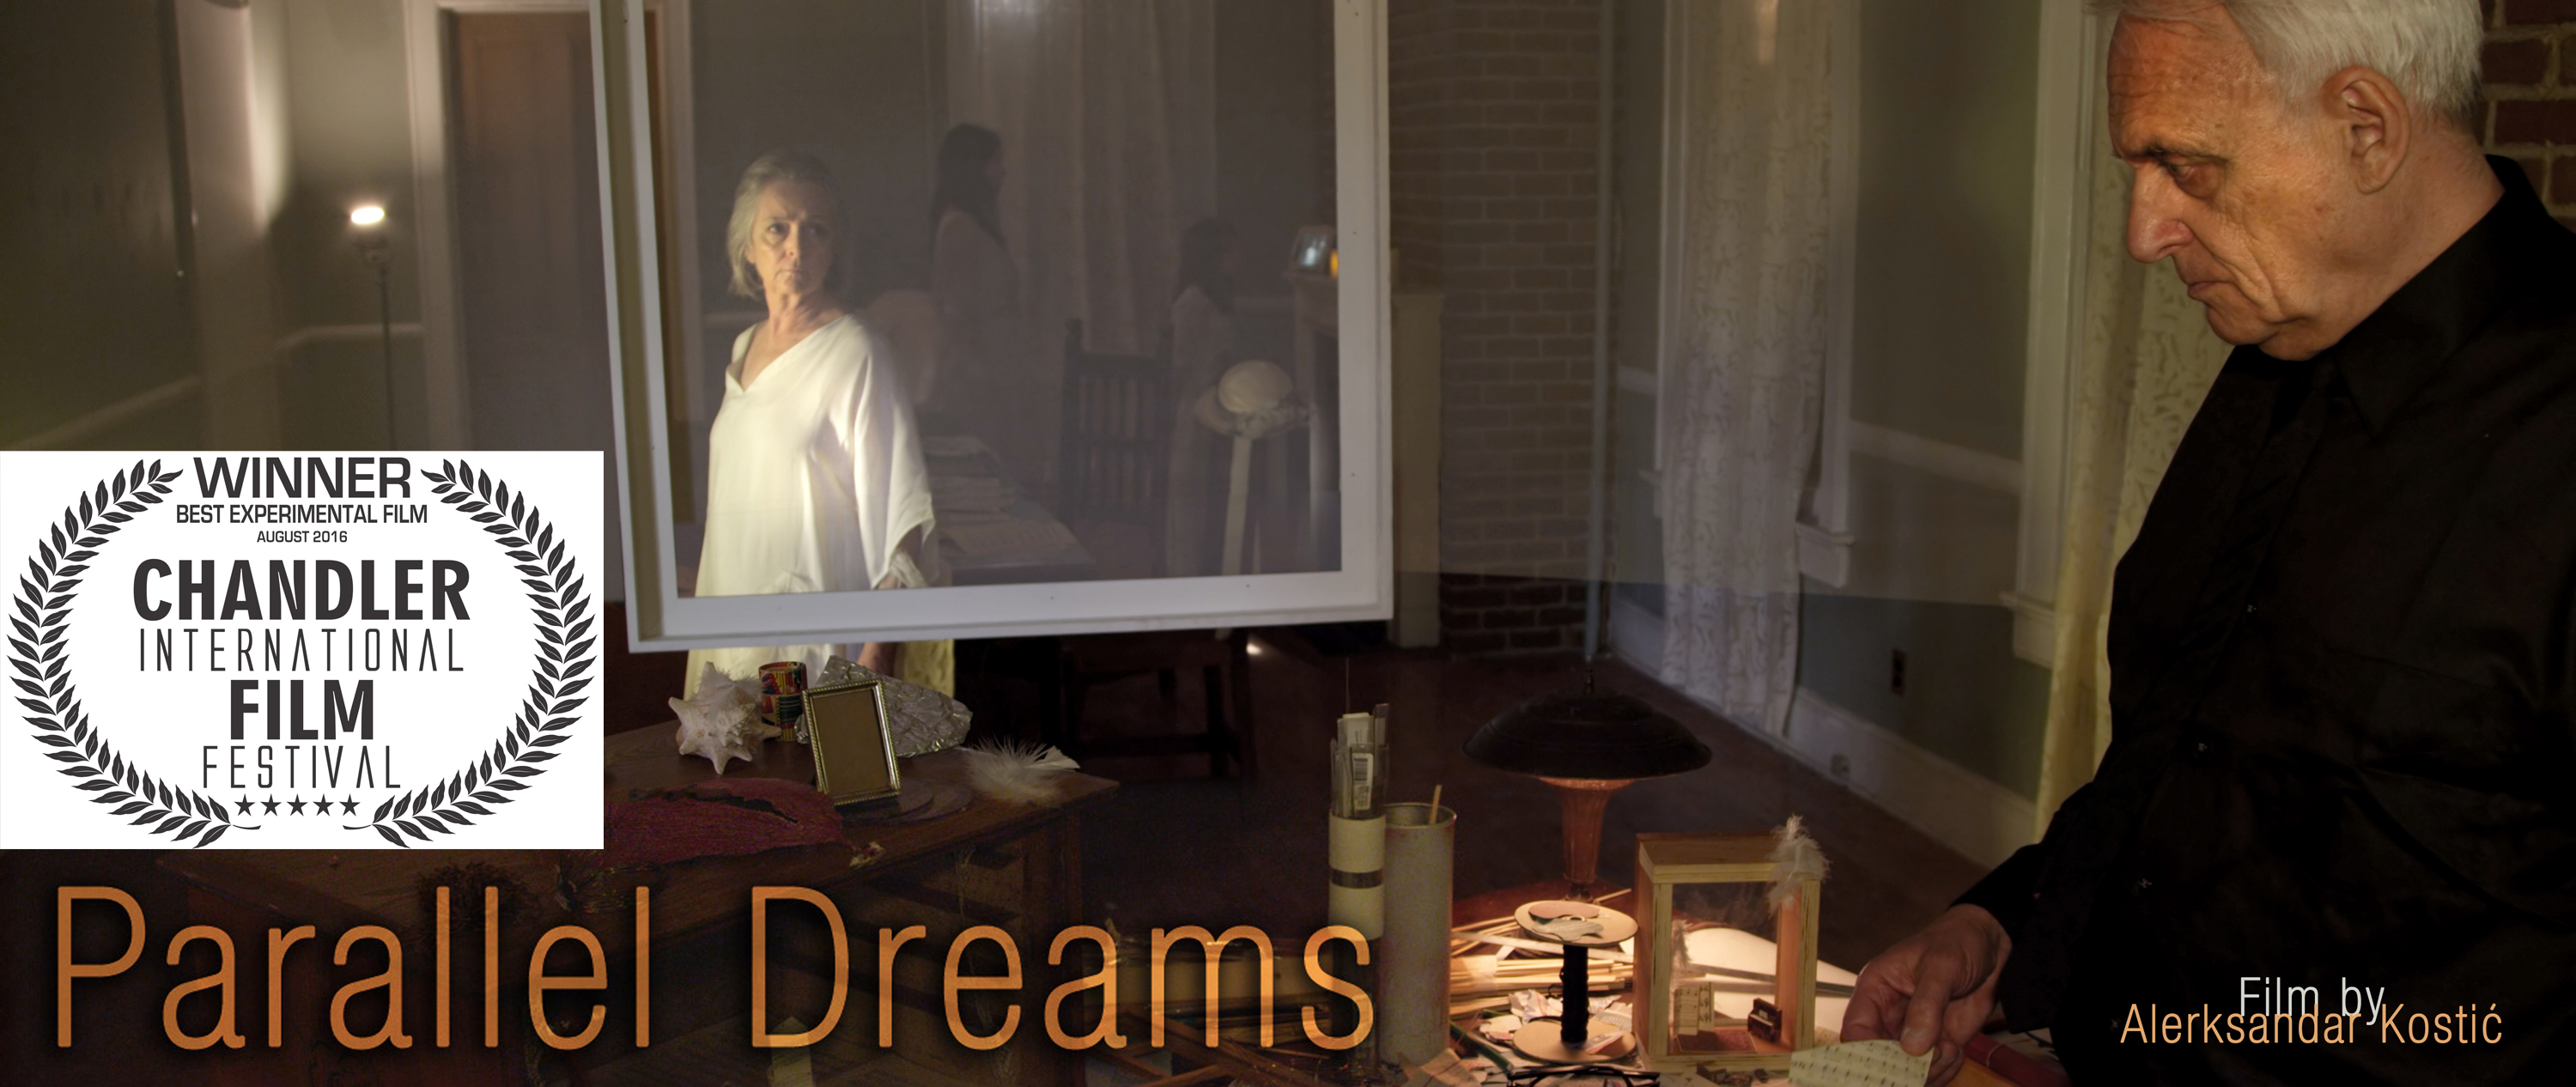 Best Experimental Film Award for Parallel Dreams Short Film